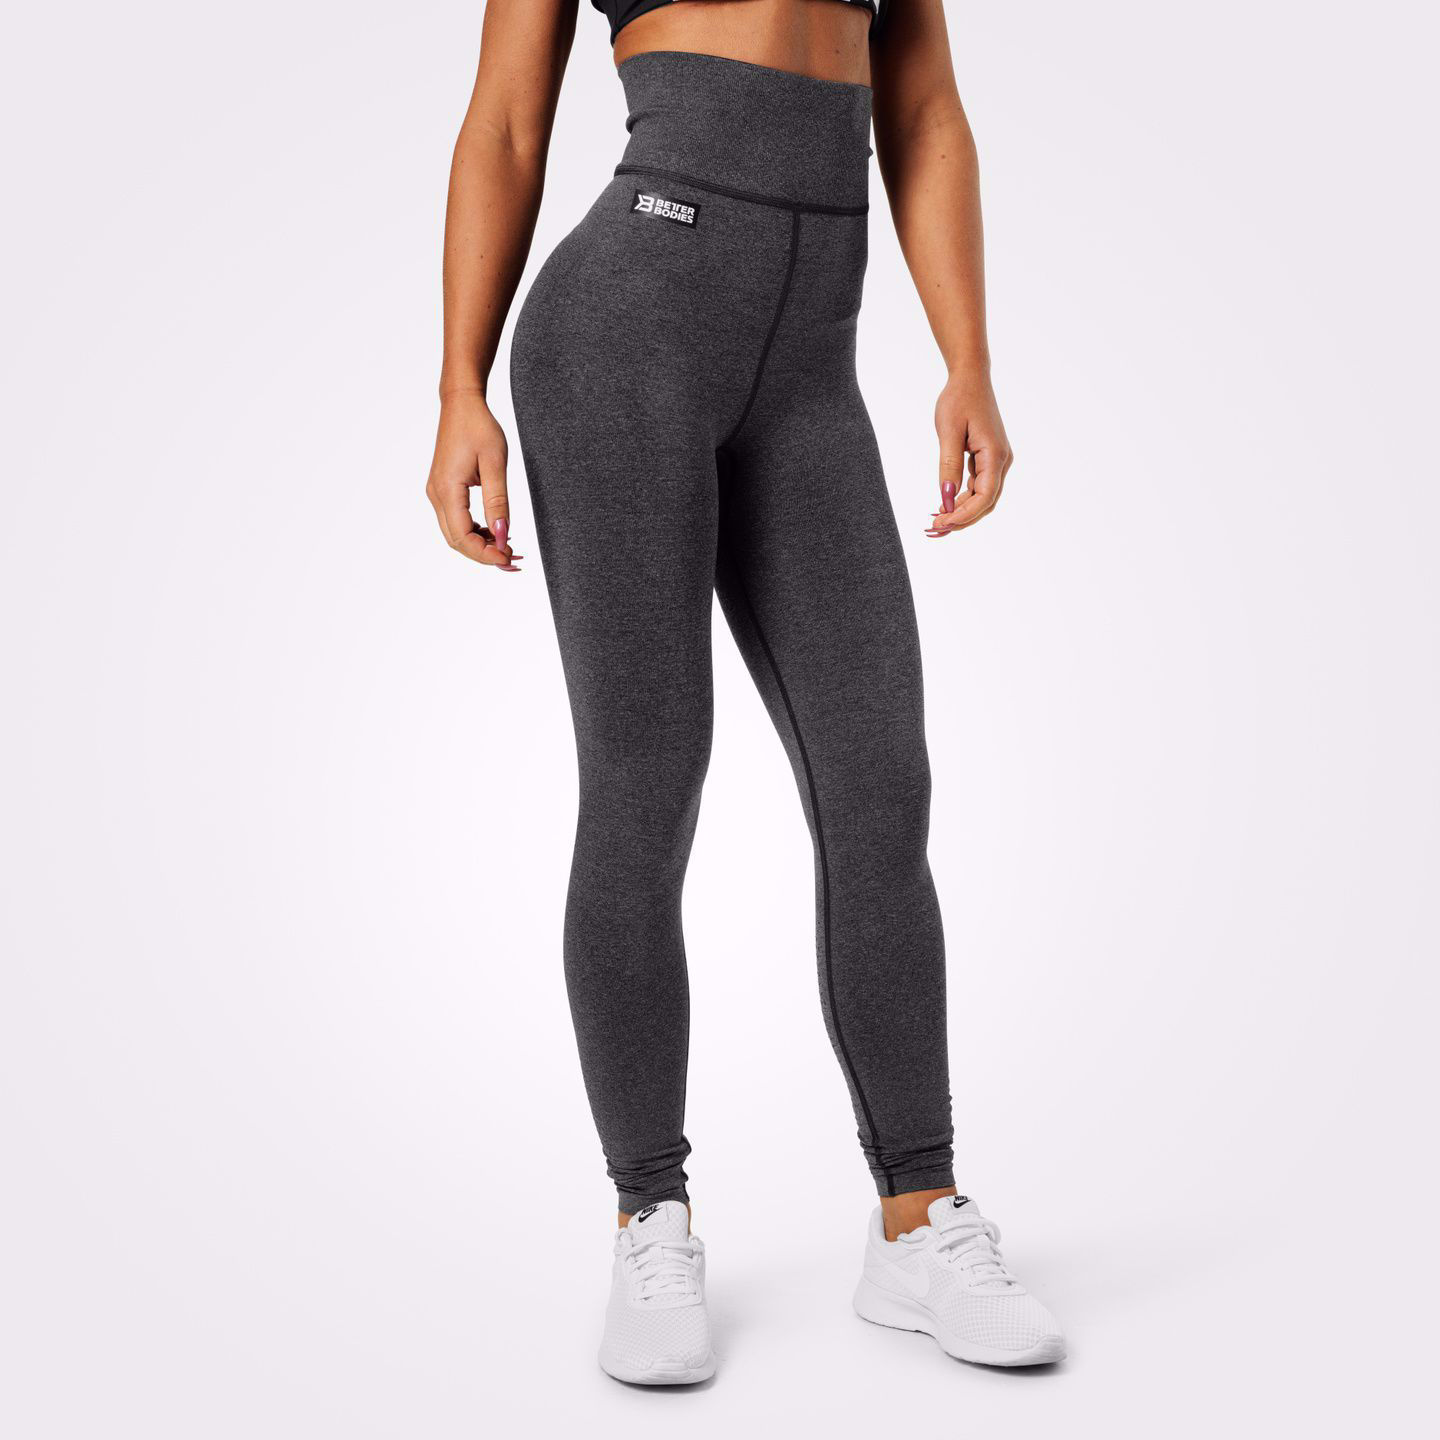 https://www.mgactivewear.com/images/thumbs/0000748_better-bodies-bowery-graphite-melange-women-high-waist-seamless-workout-legging.jpeg